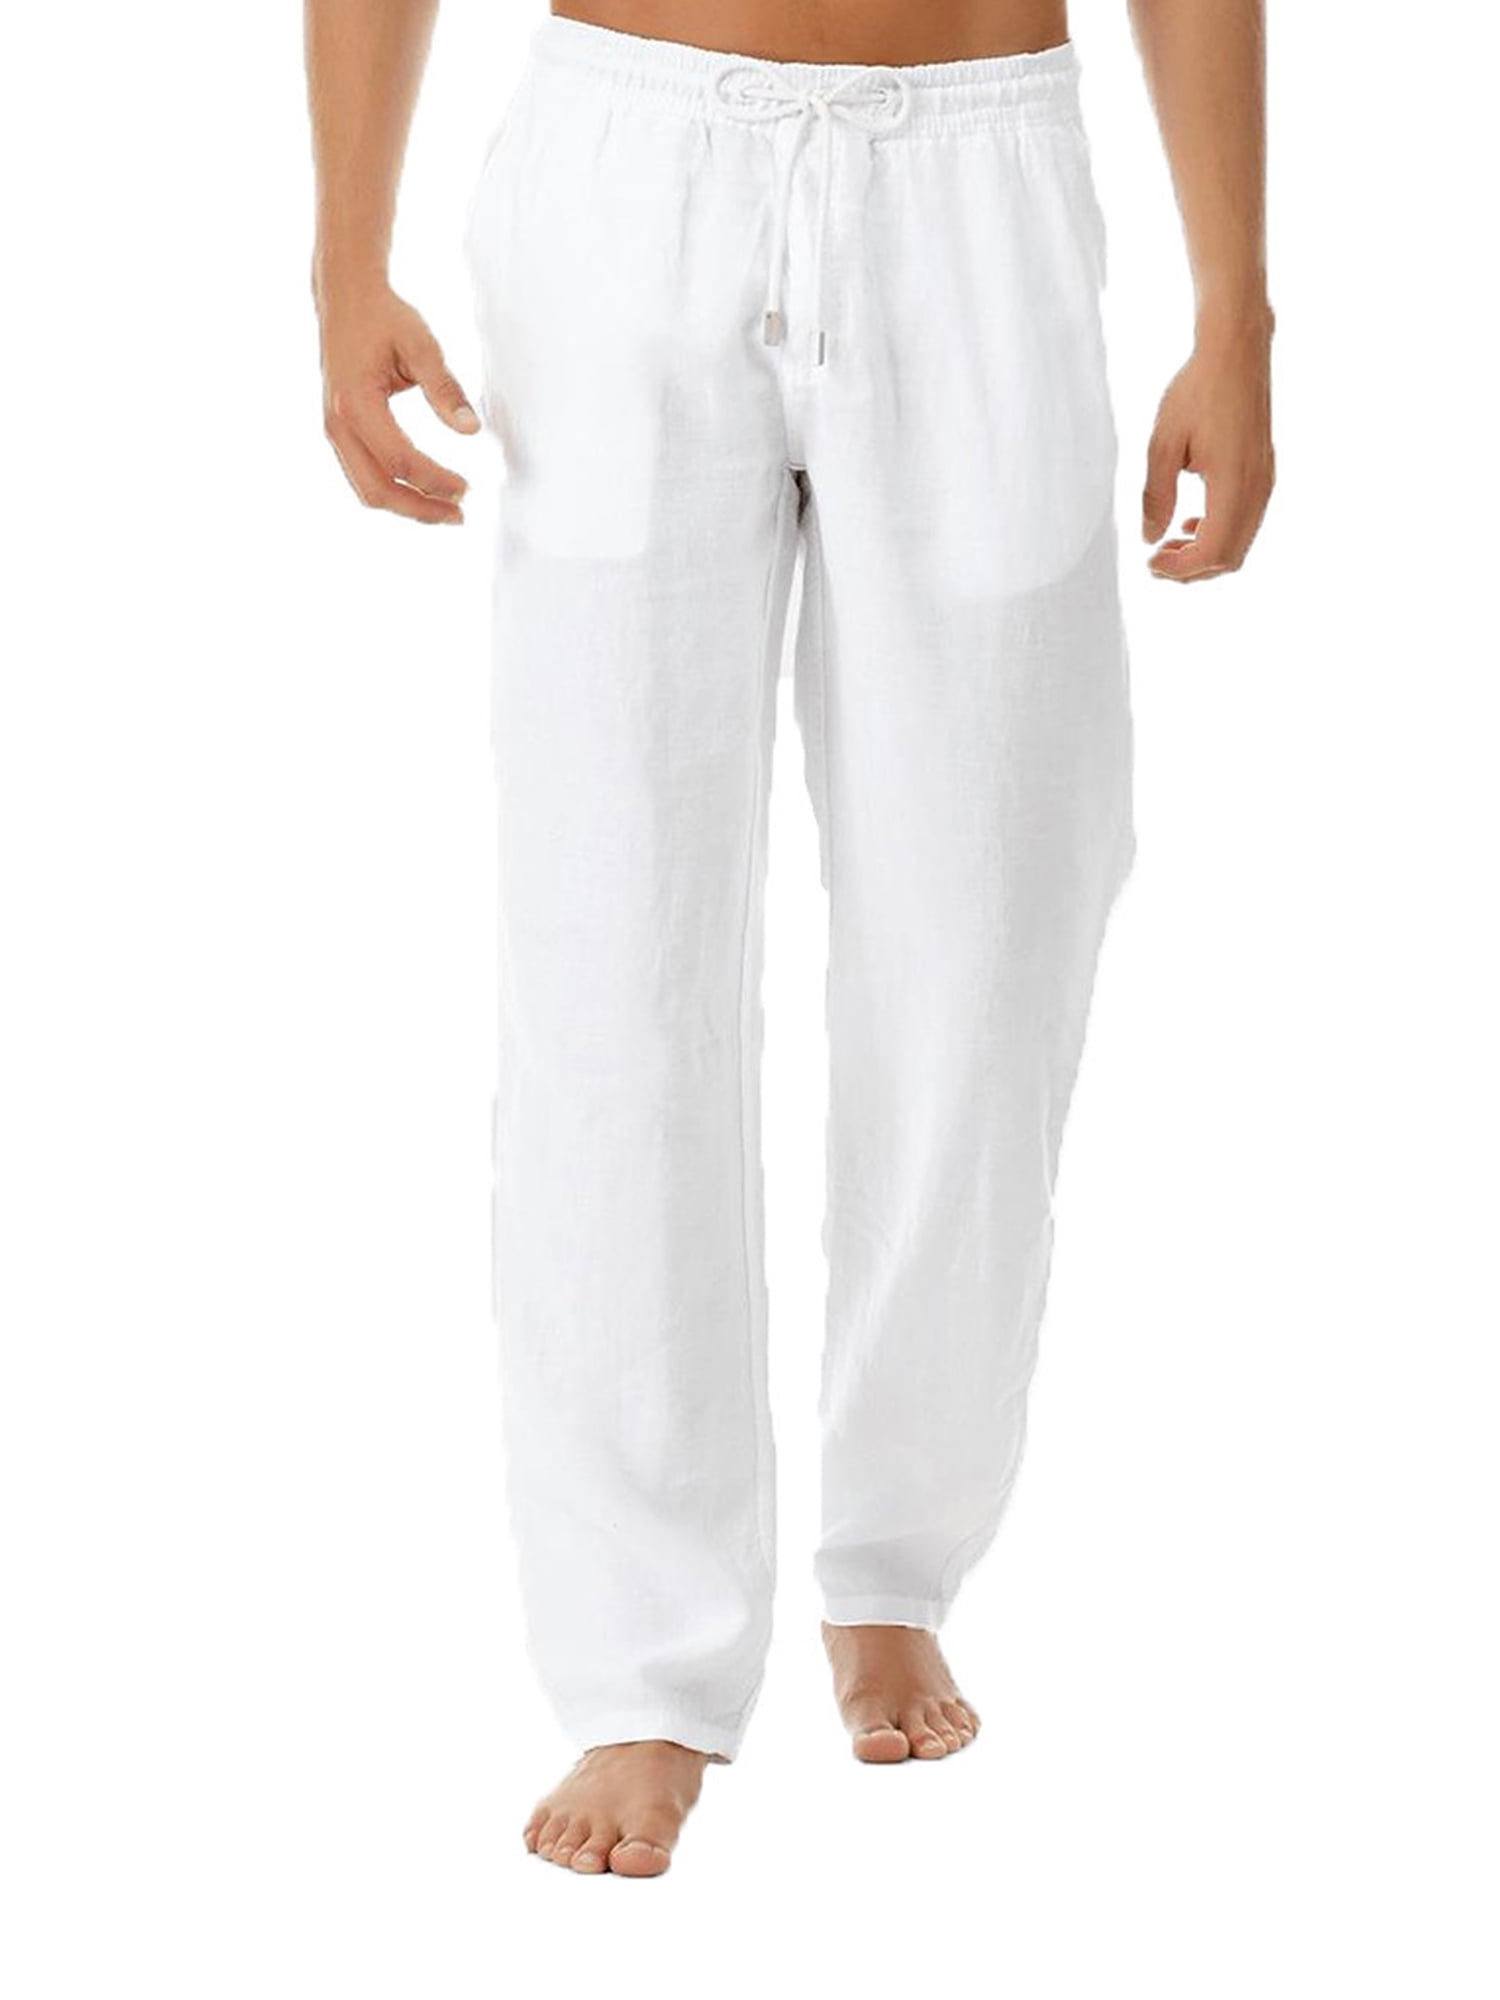 Men's Casual Sports Long Pants Loose Lounge Jogging Dance Yoga Pyjama Trousers 